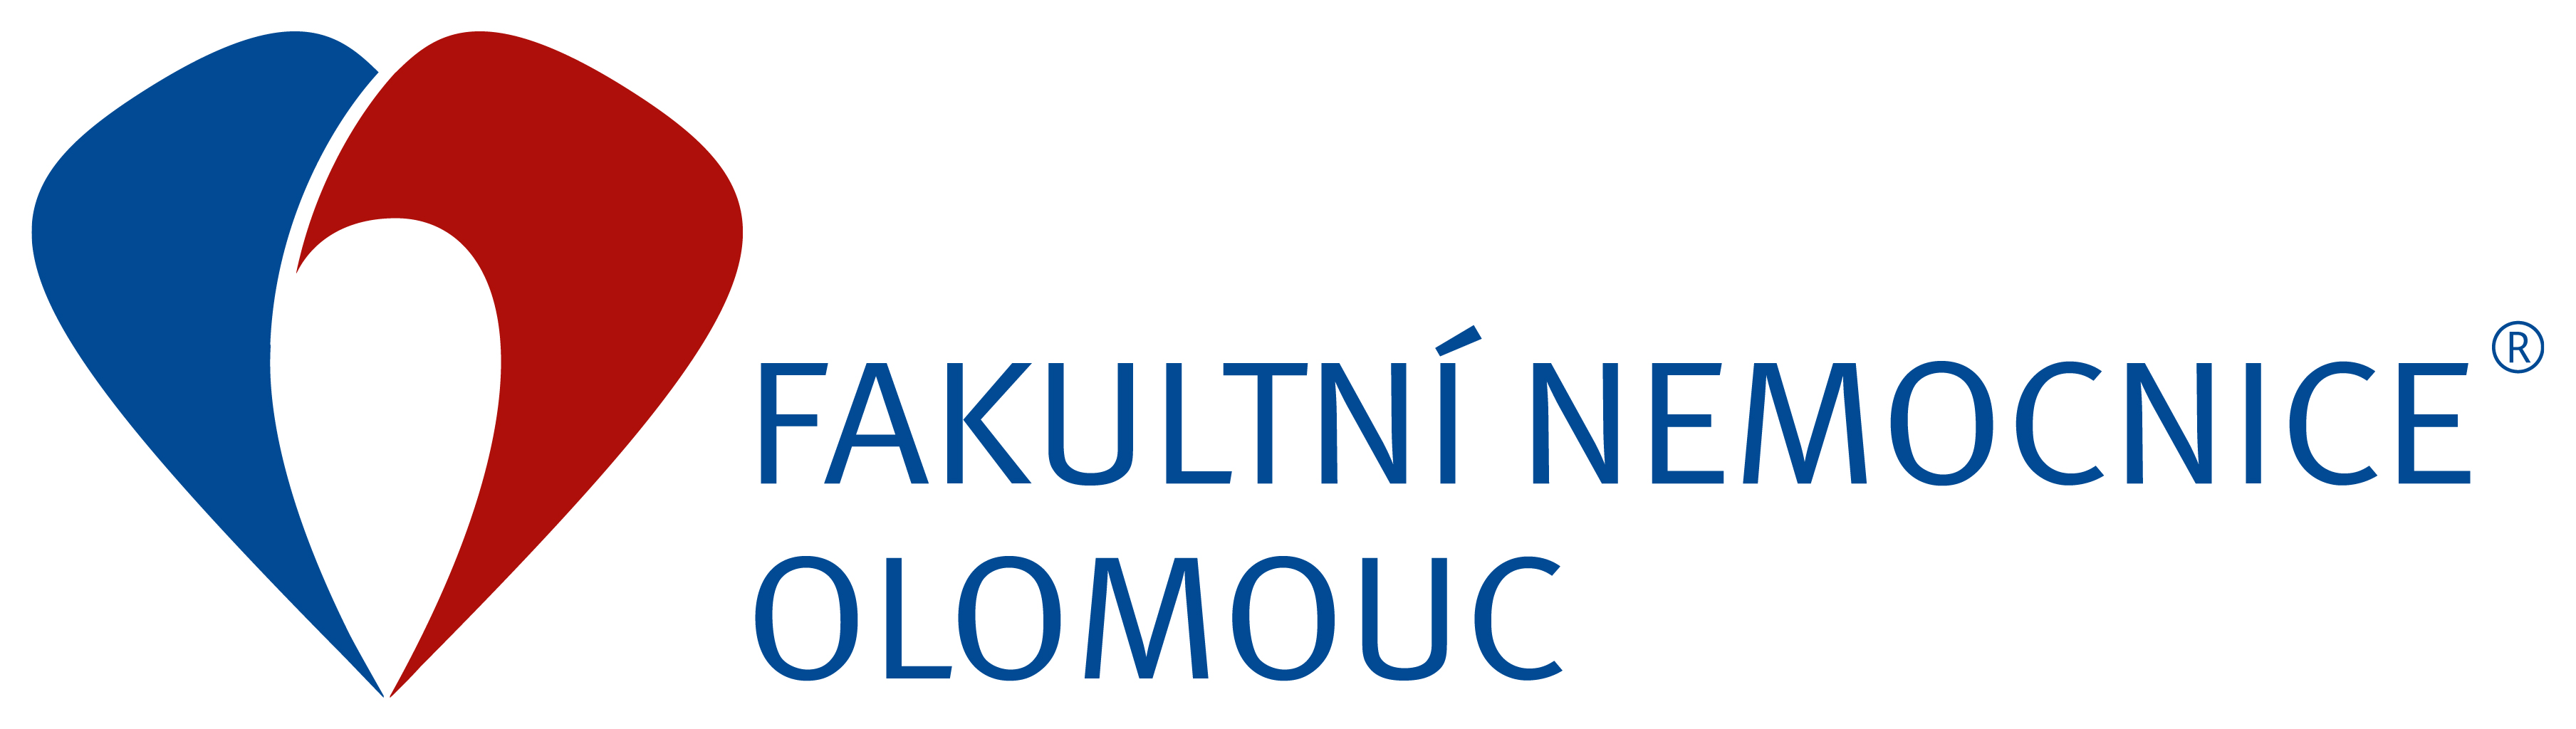 FN Olomouc